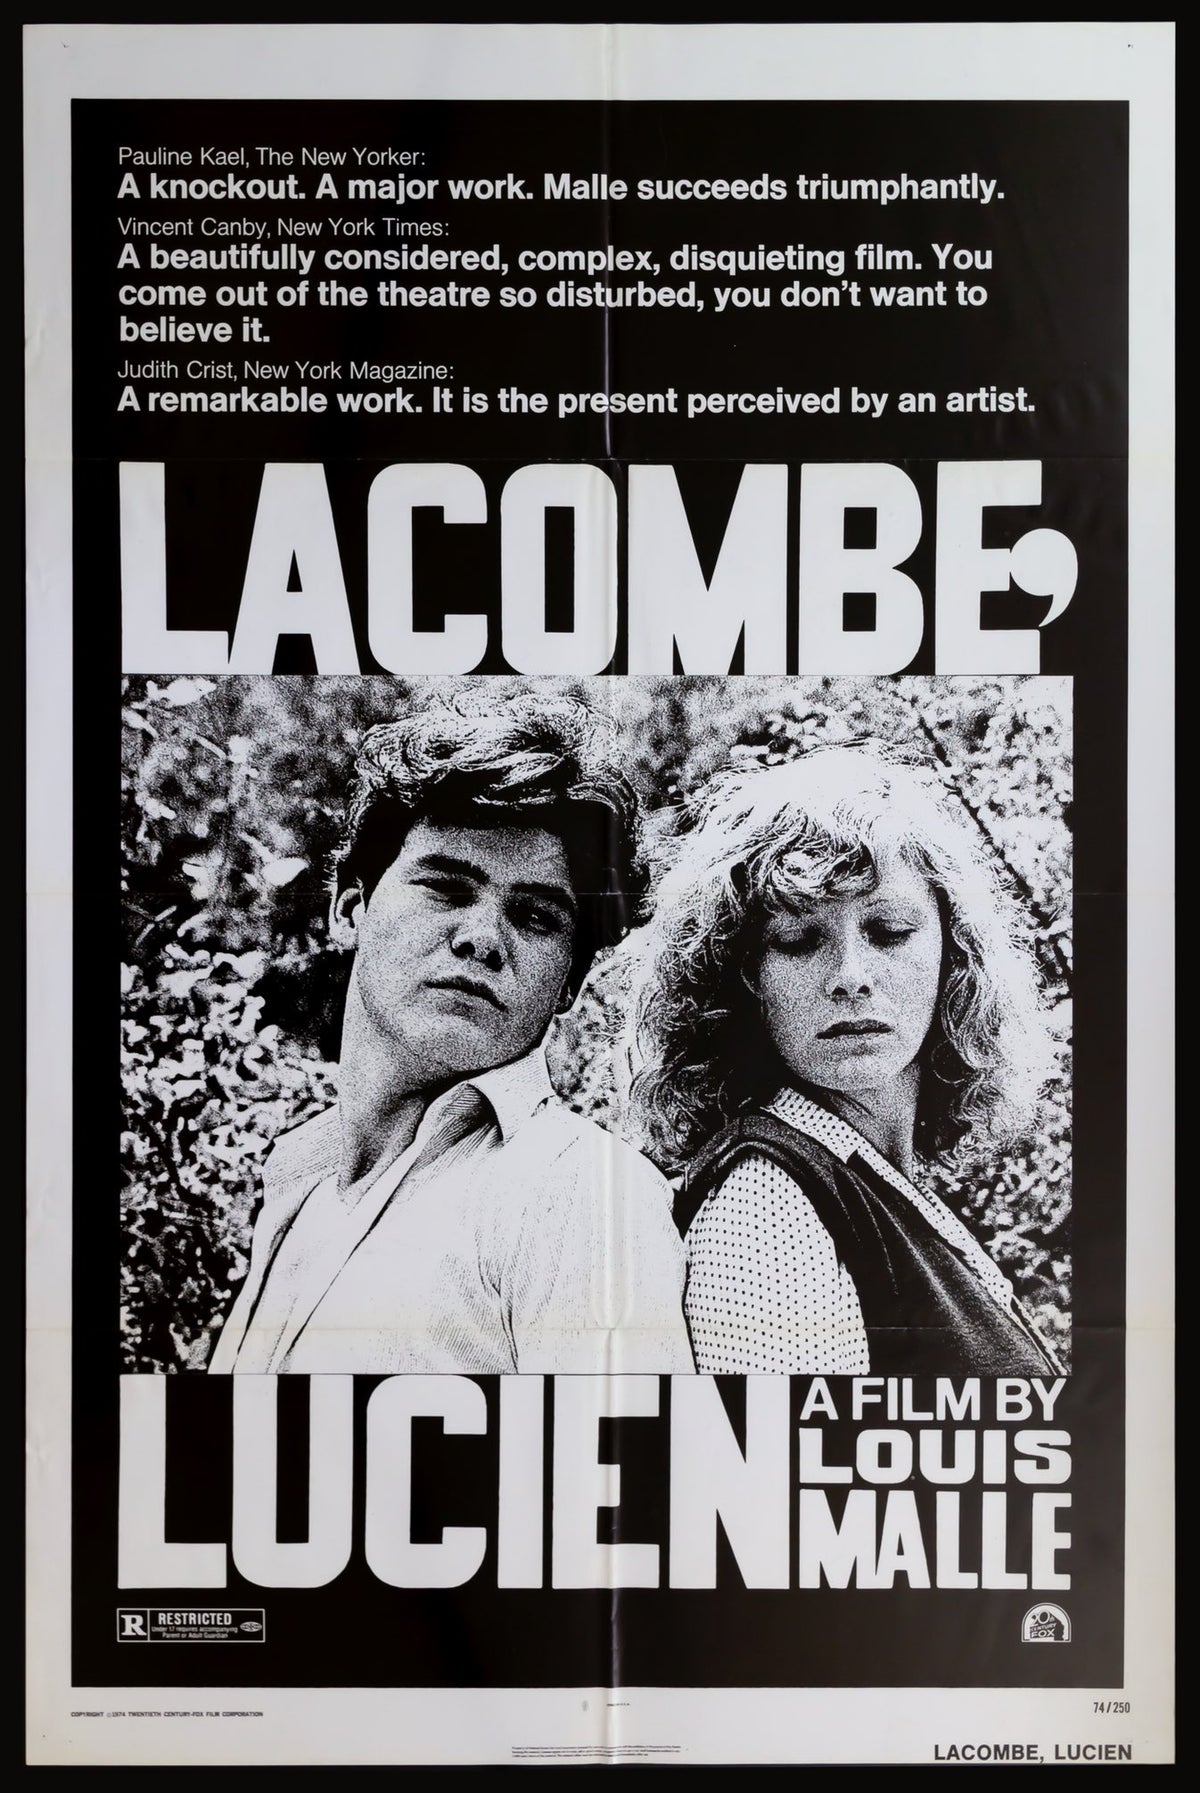 Lacombe, Lucien (1974) original movie poster for sale at Original Film Art